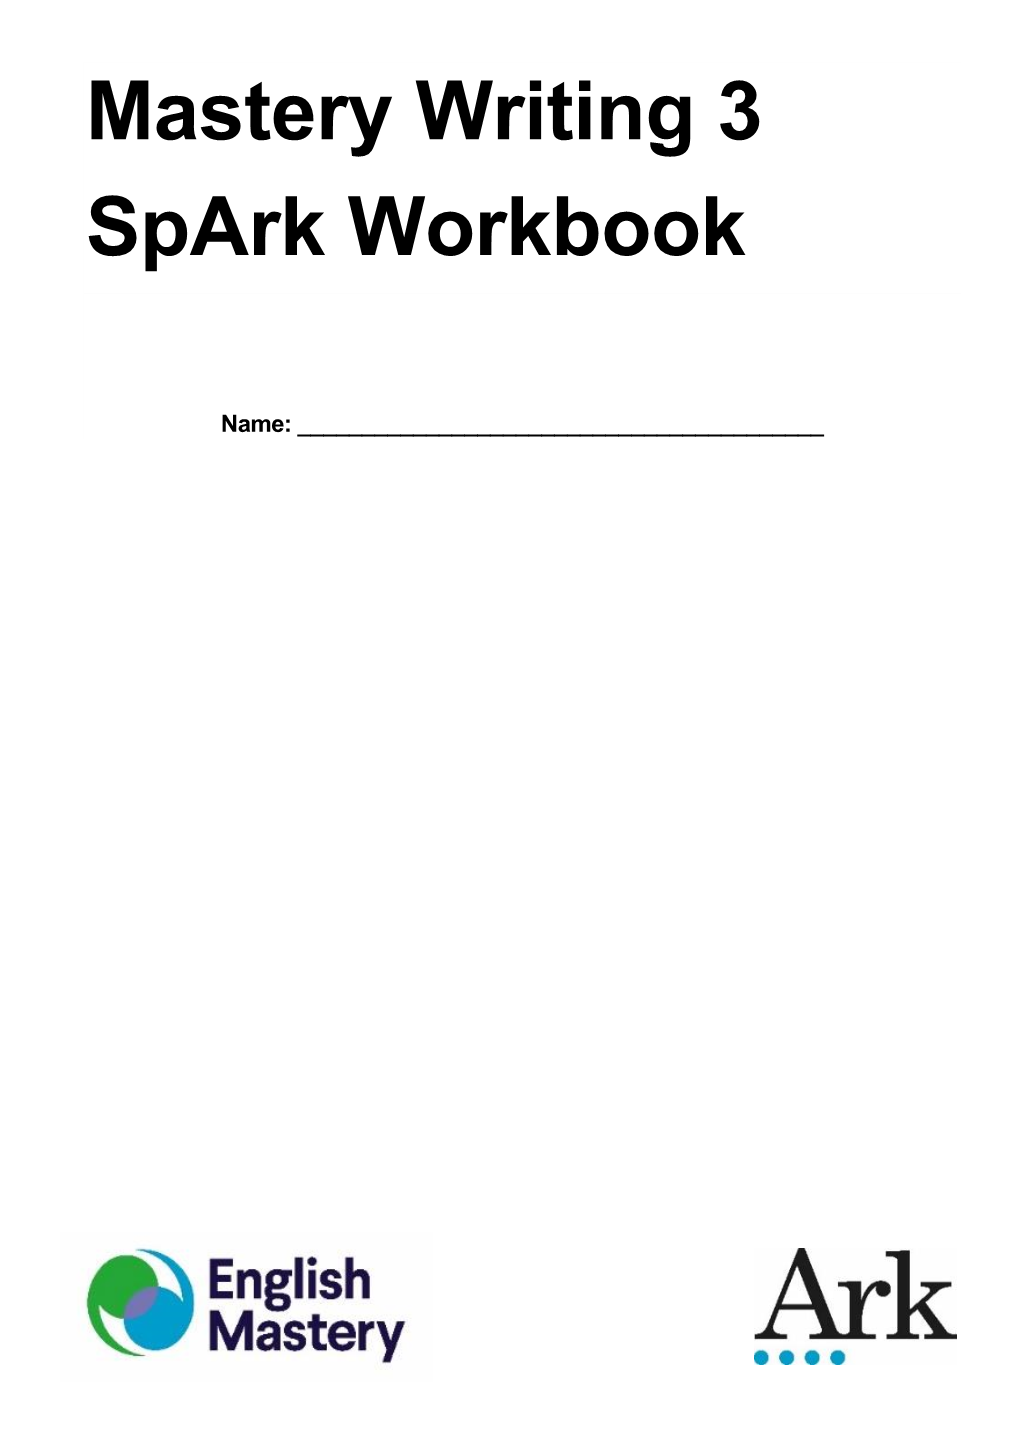 Mastery Writing 3 Spark Workbook